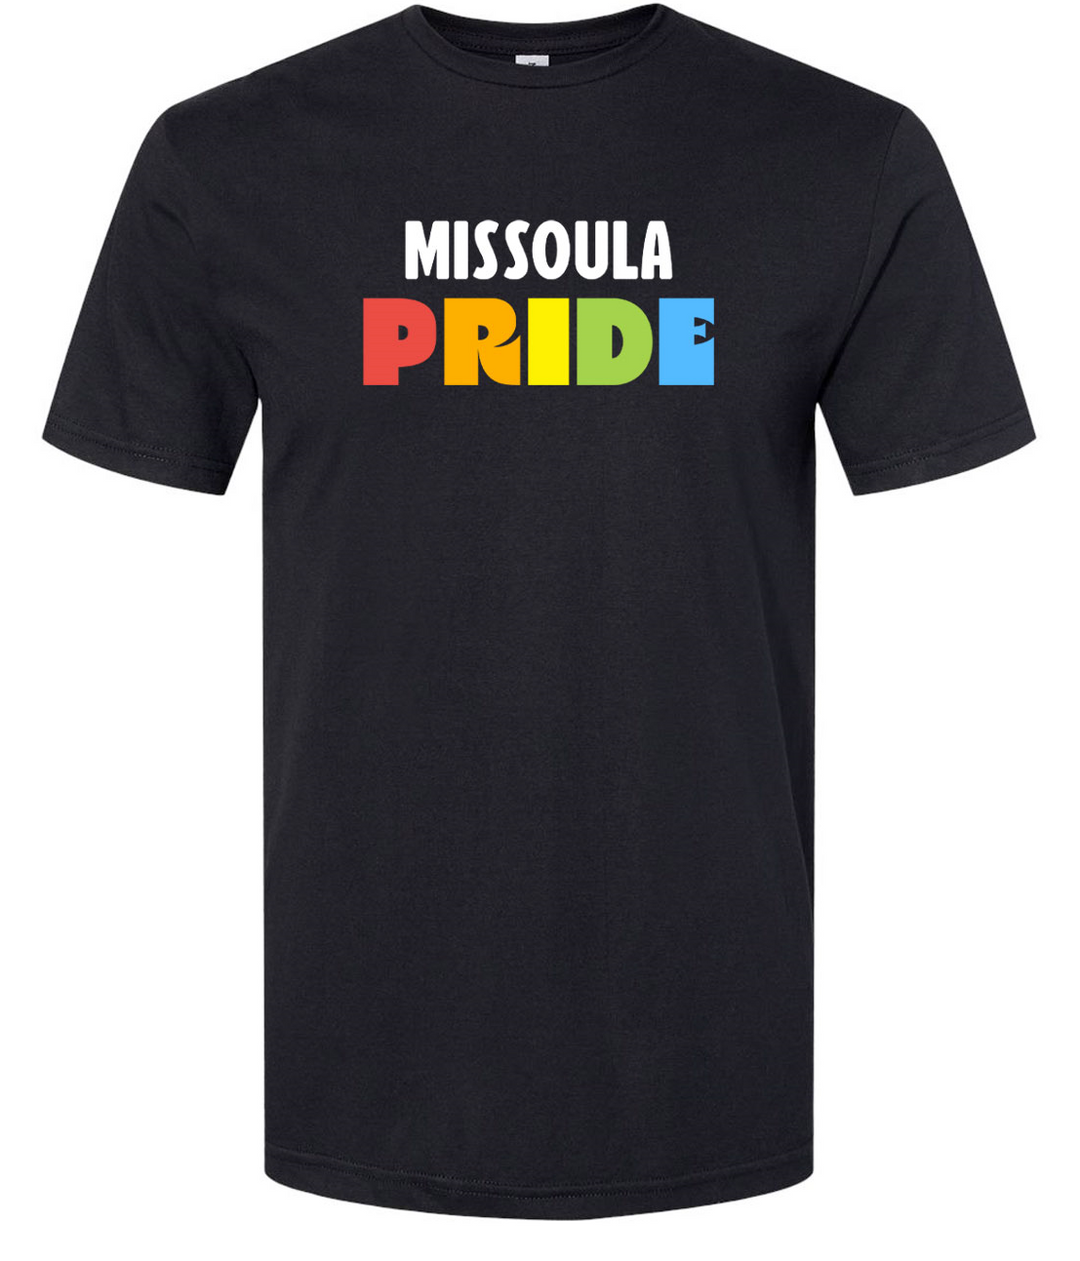 Missoula PRIDE T-Shirt - Black or Purple